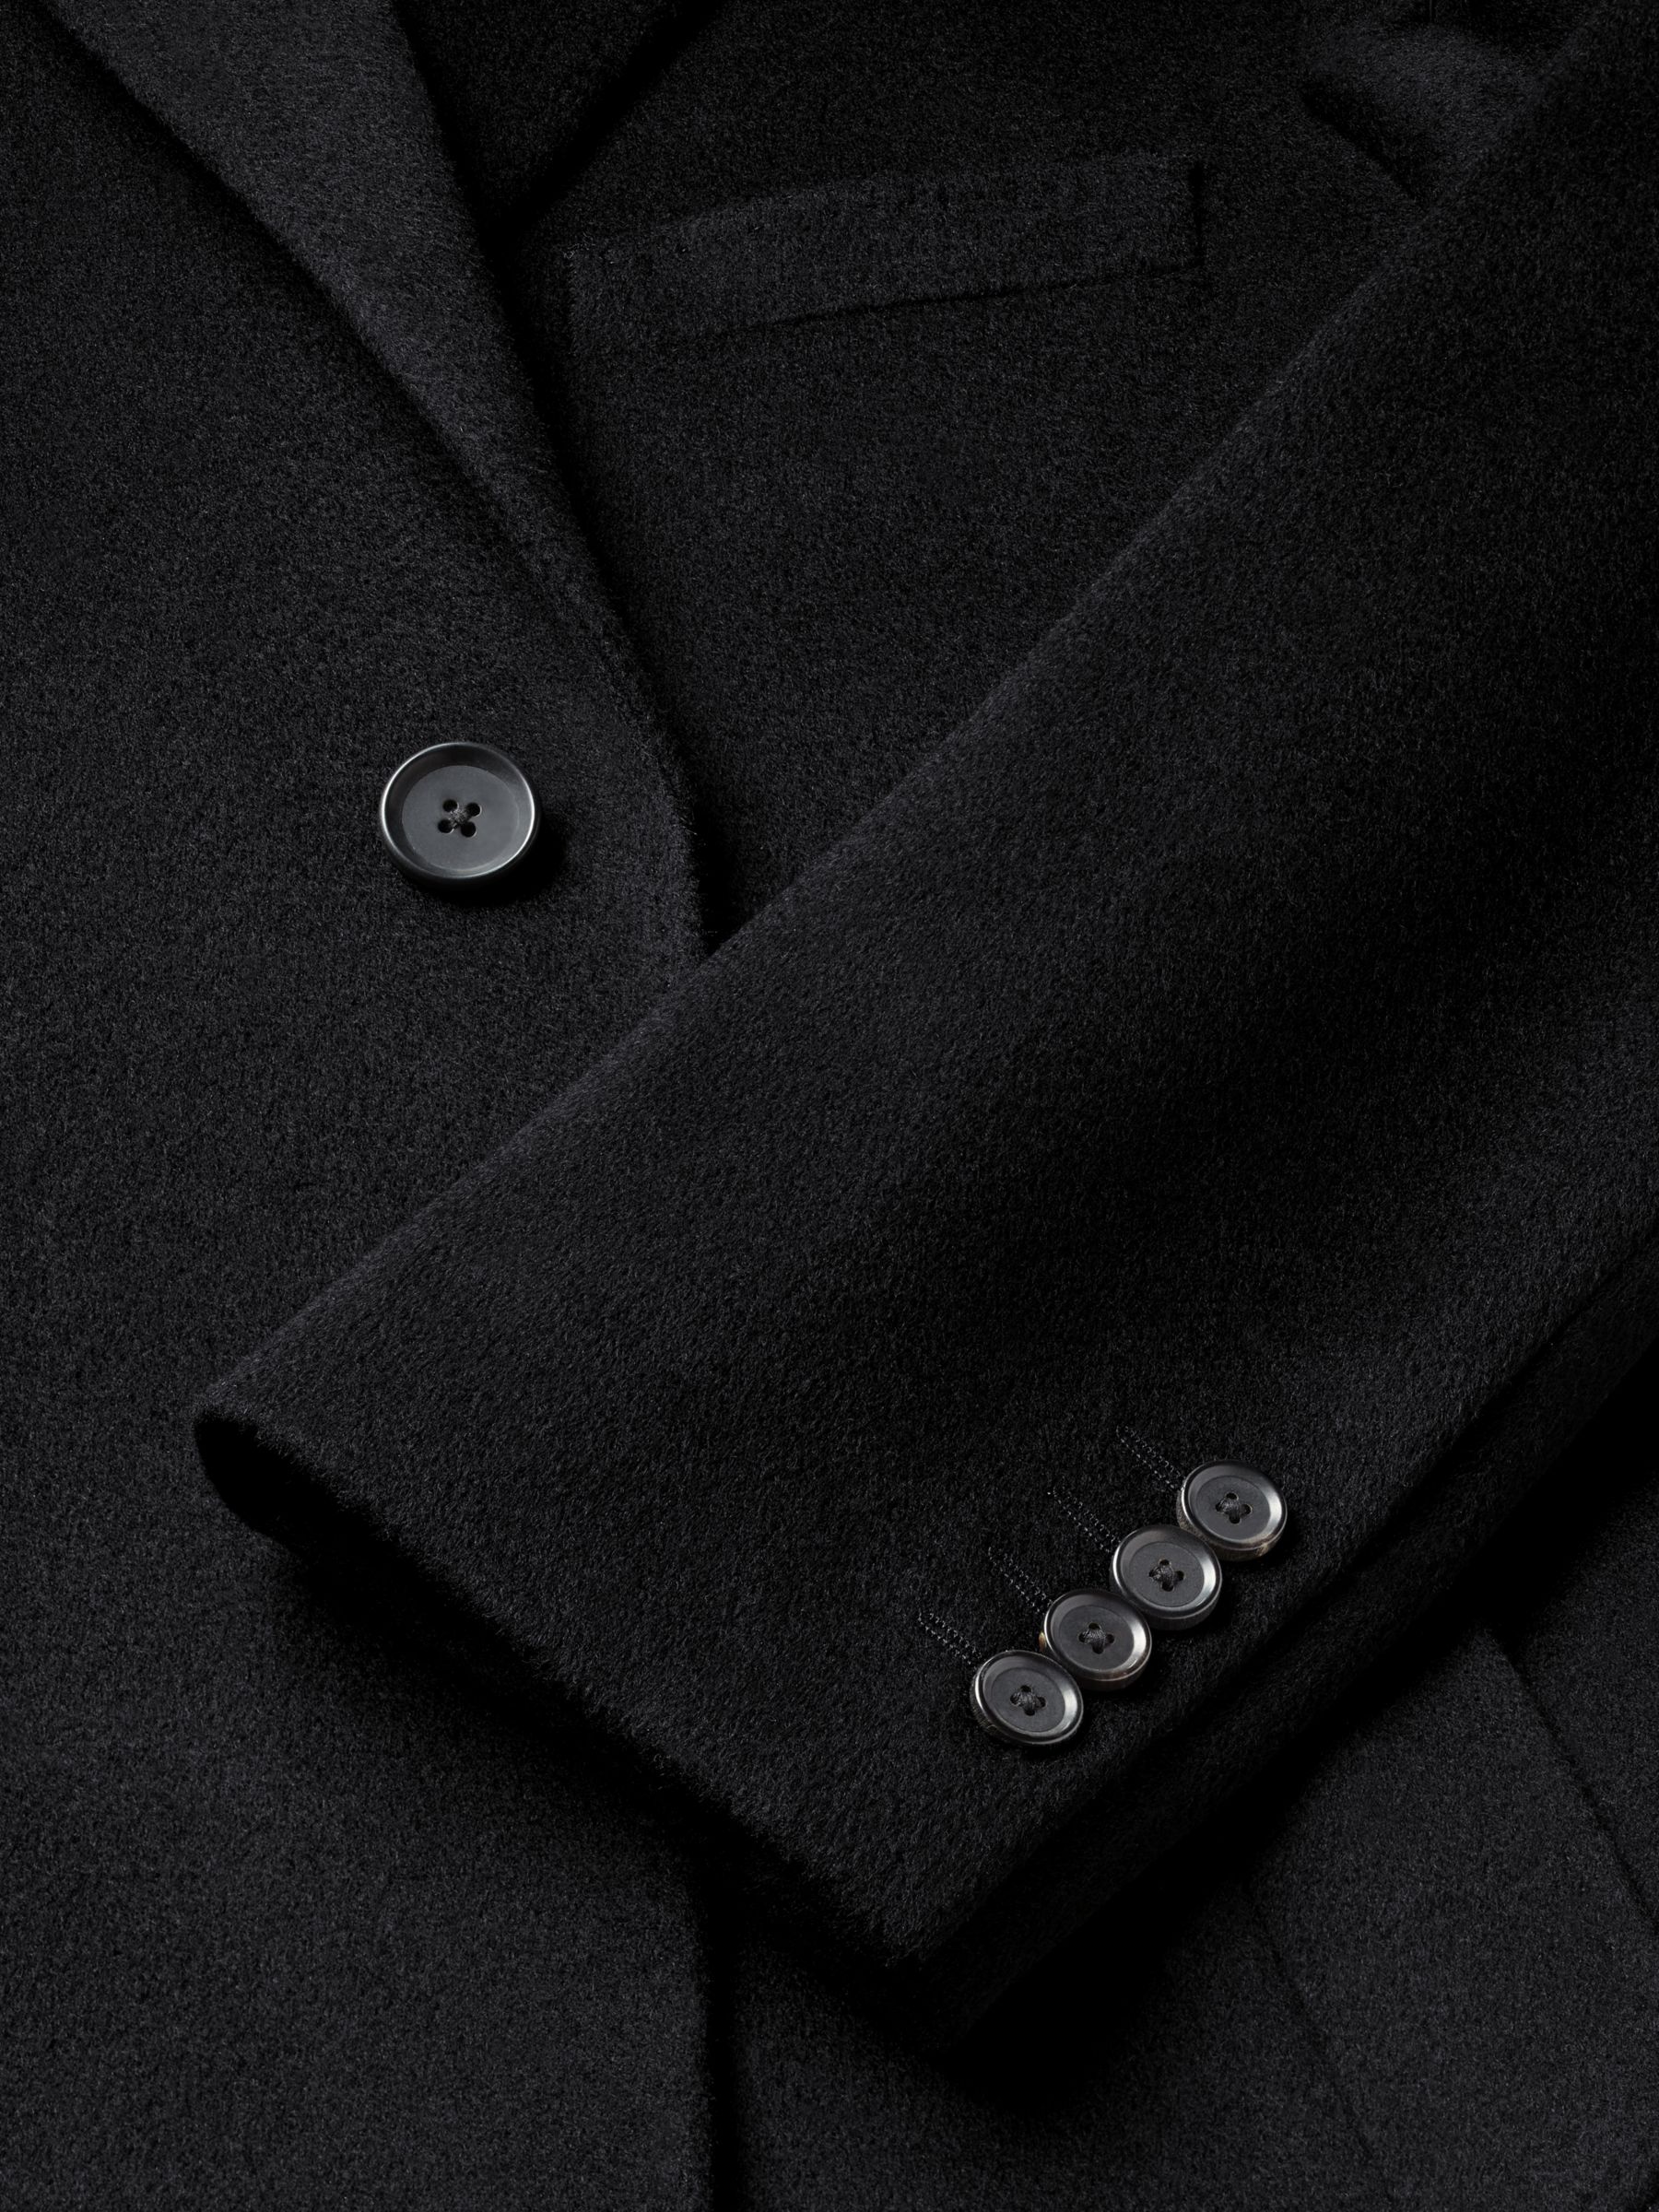 Charles Tyrwhitt Merino Wool Overcoat at John Lewis & Partners